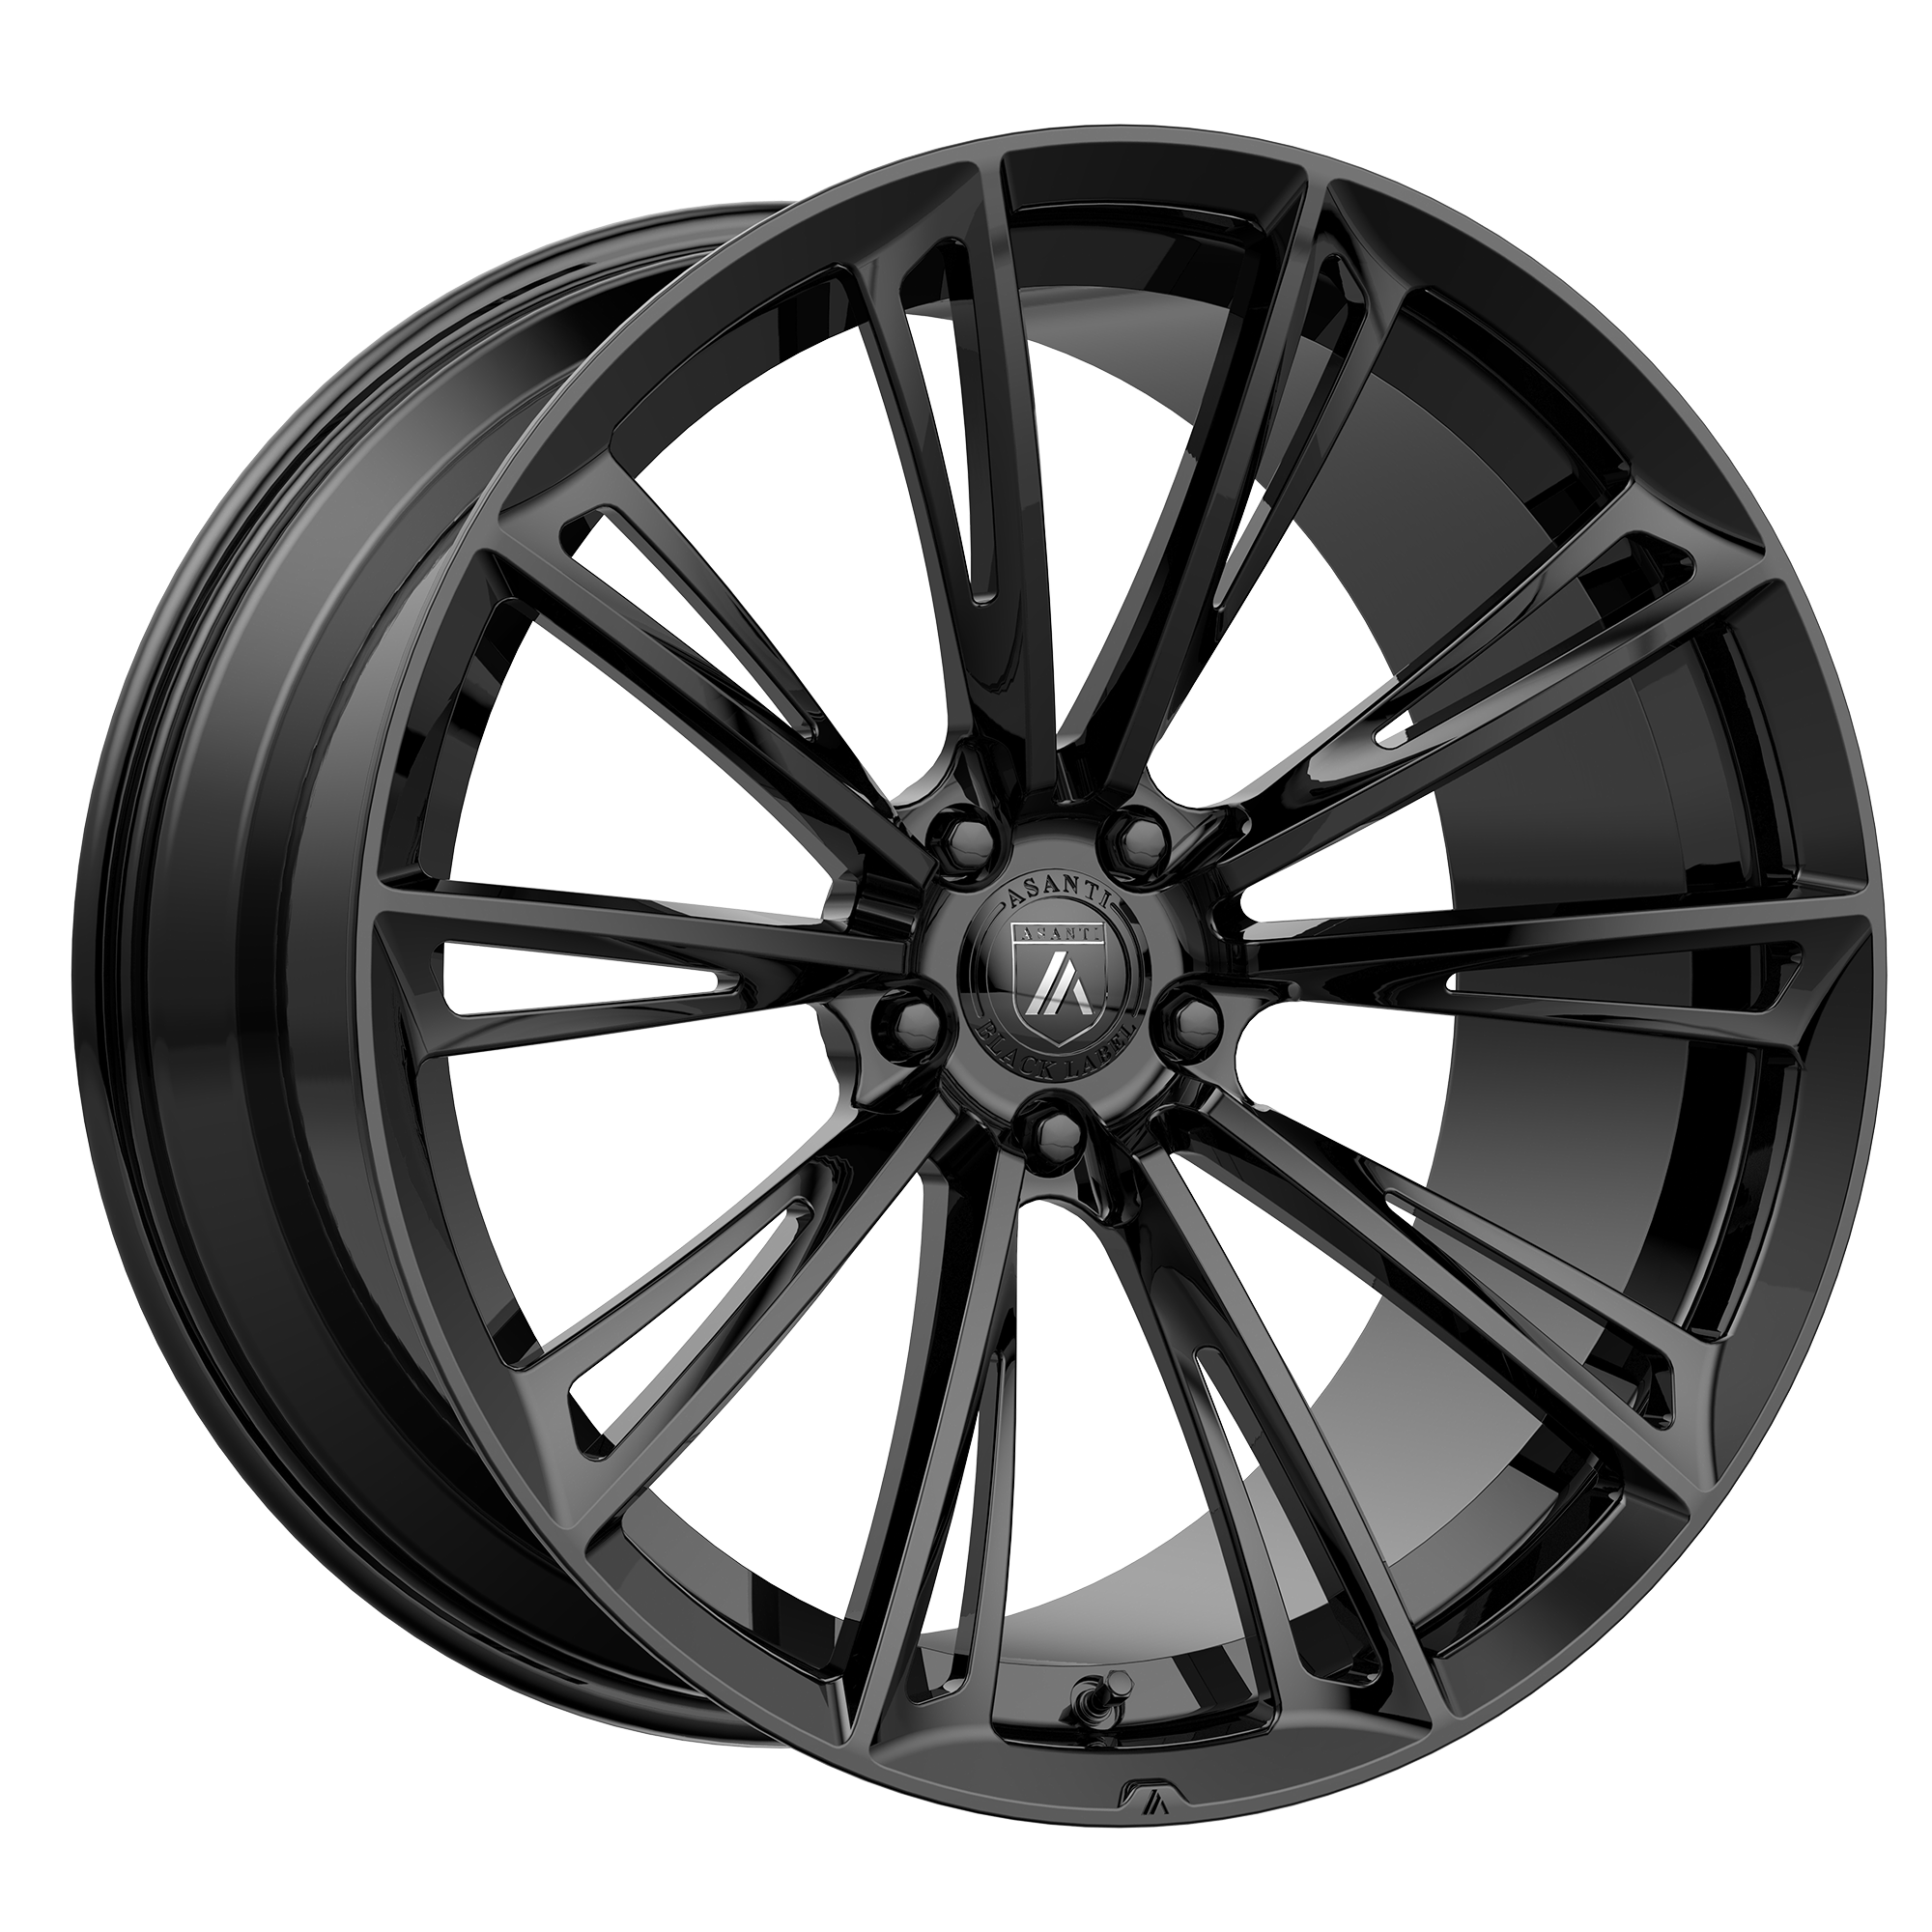 CORONA 20x10.5 5x114.30 GLOSS BLACK (38 mm) - Tires and Engine Performance